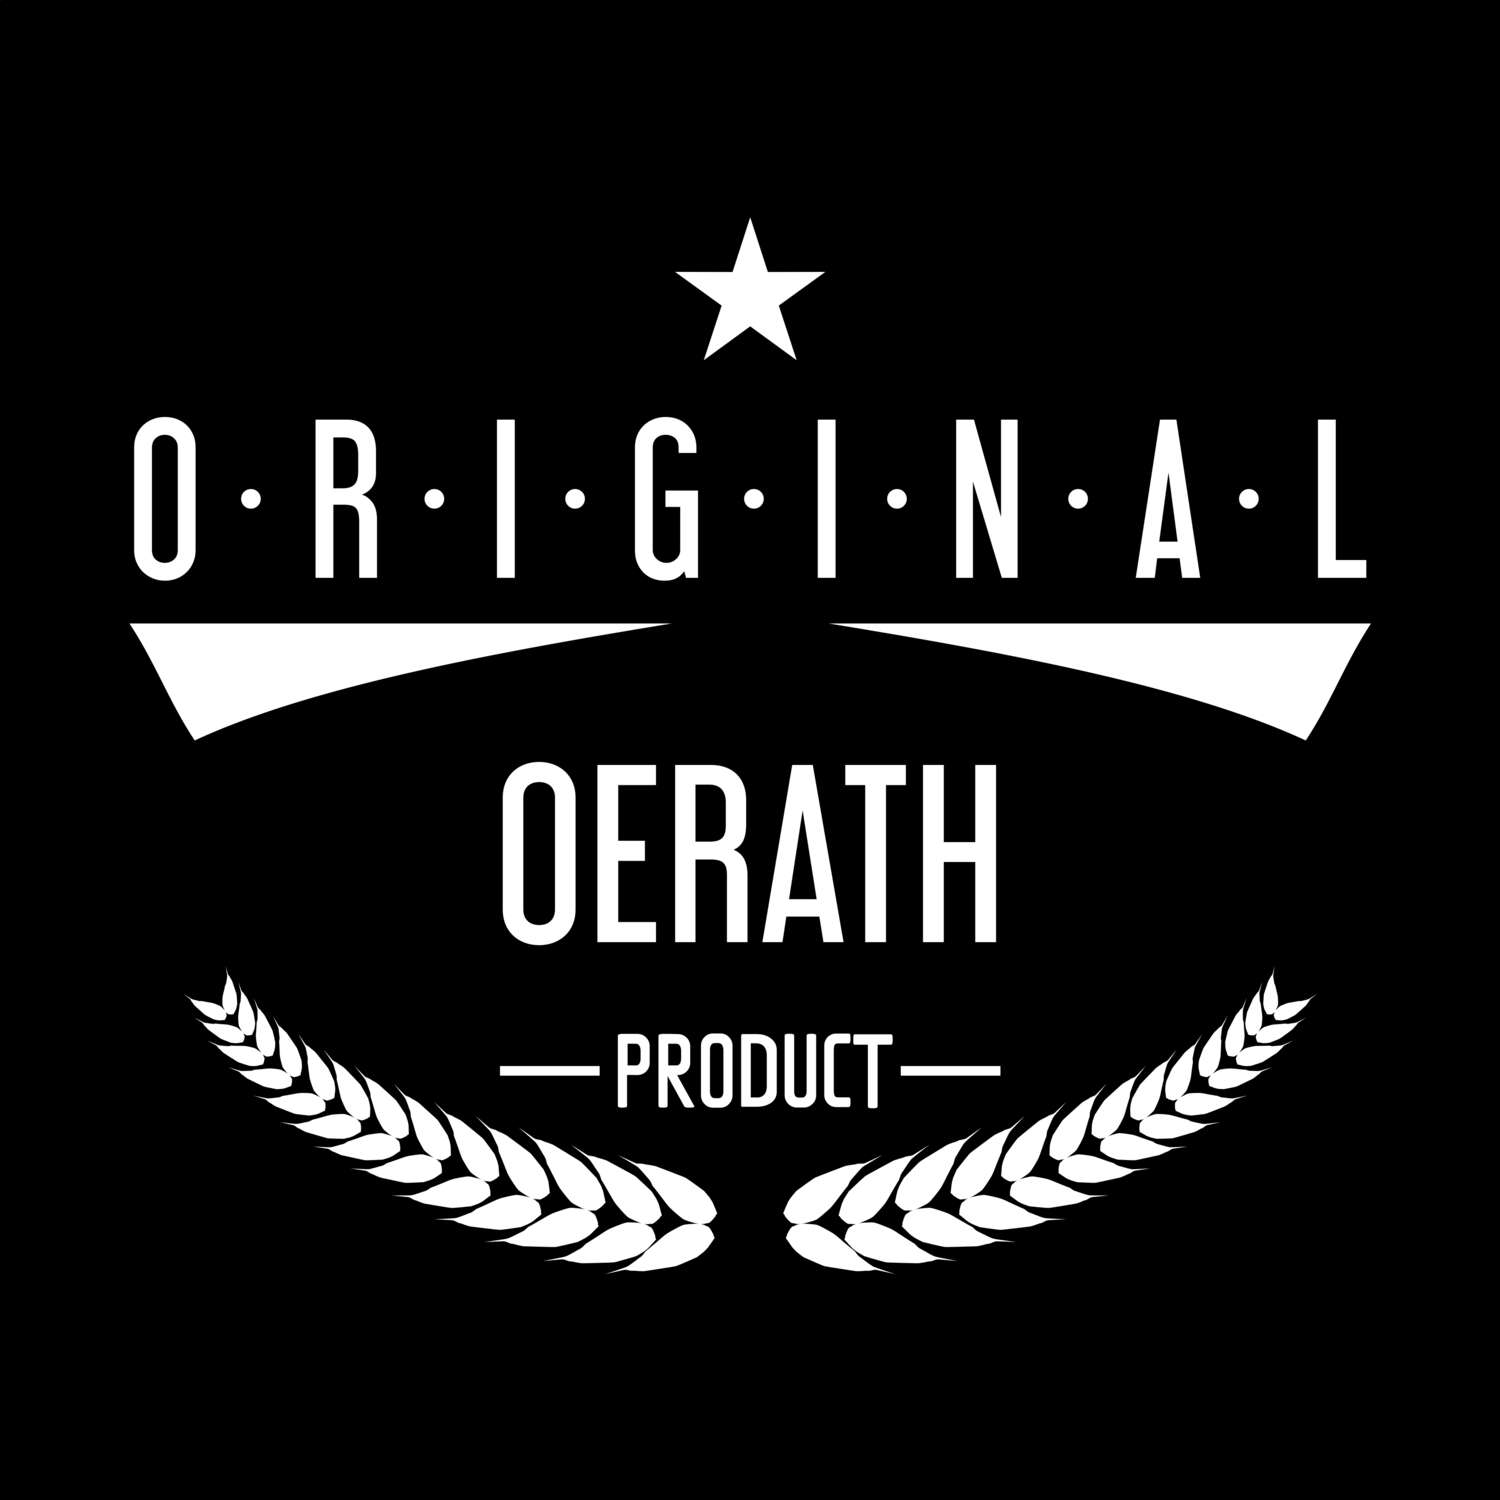 Oerath T-Shirt »Original Product«